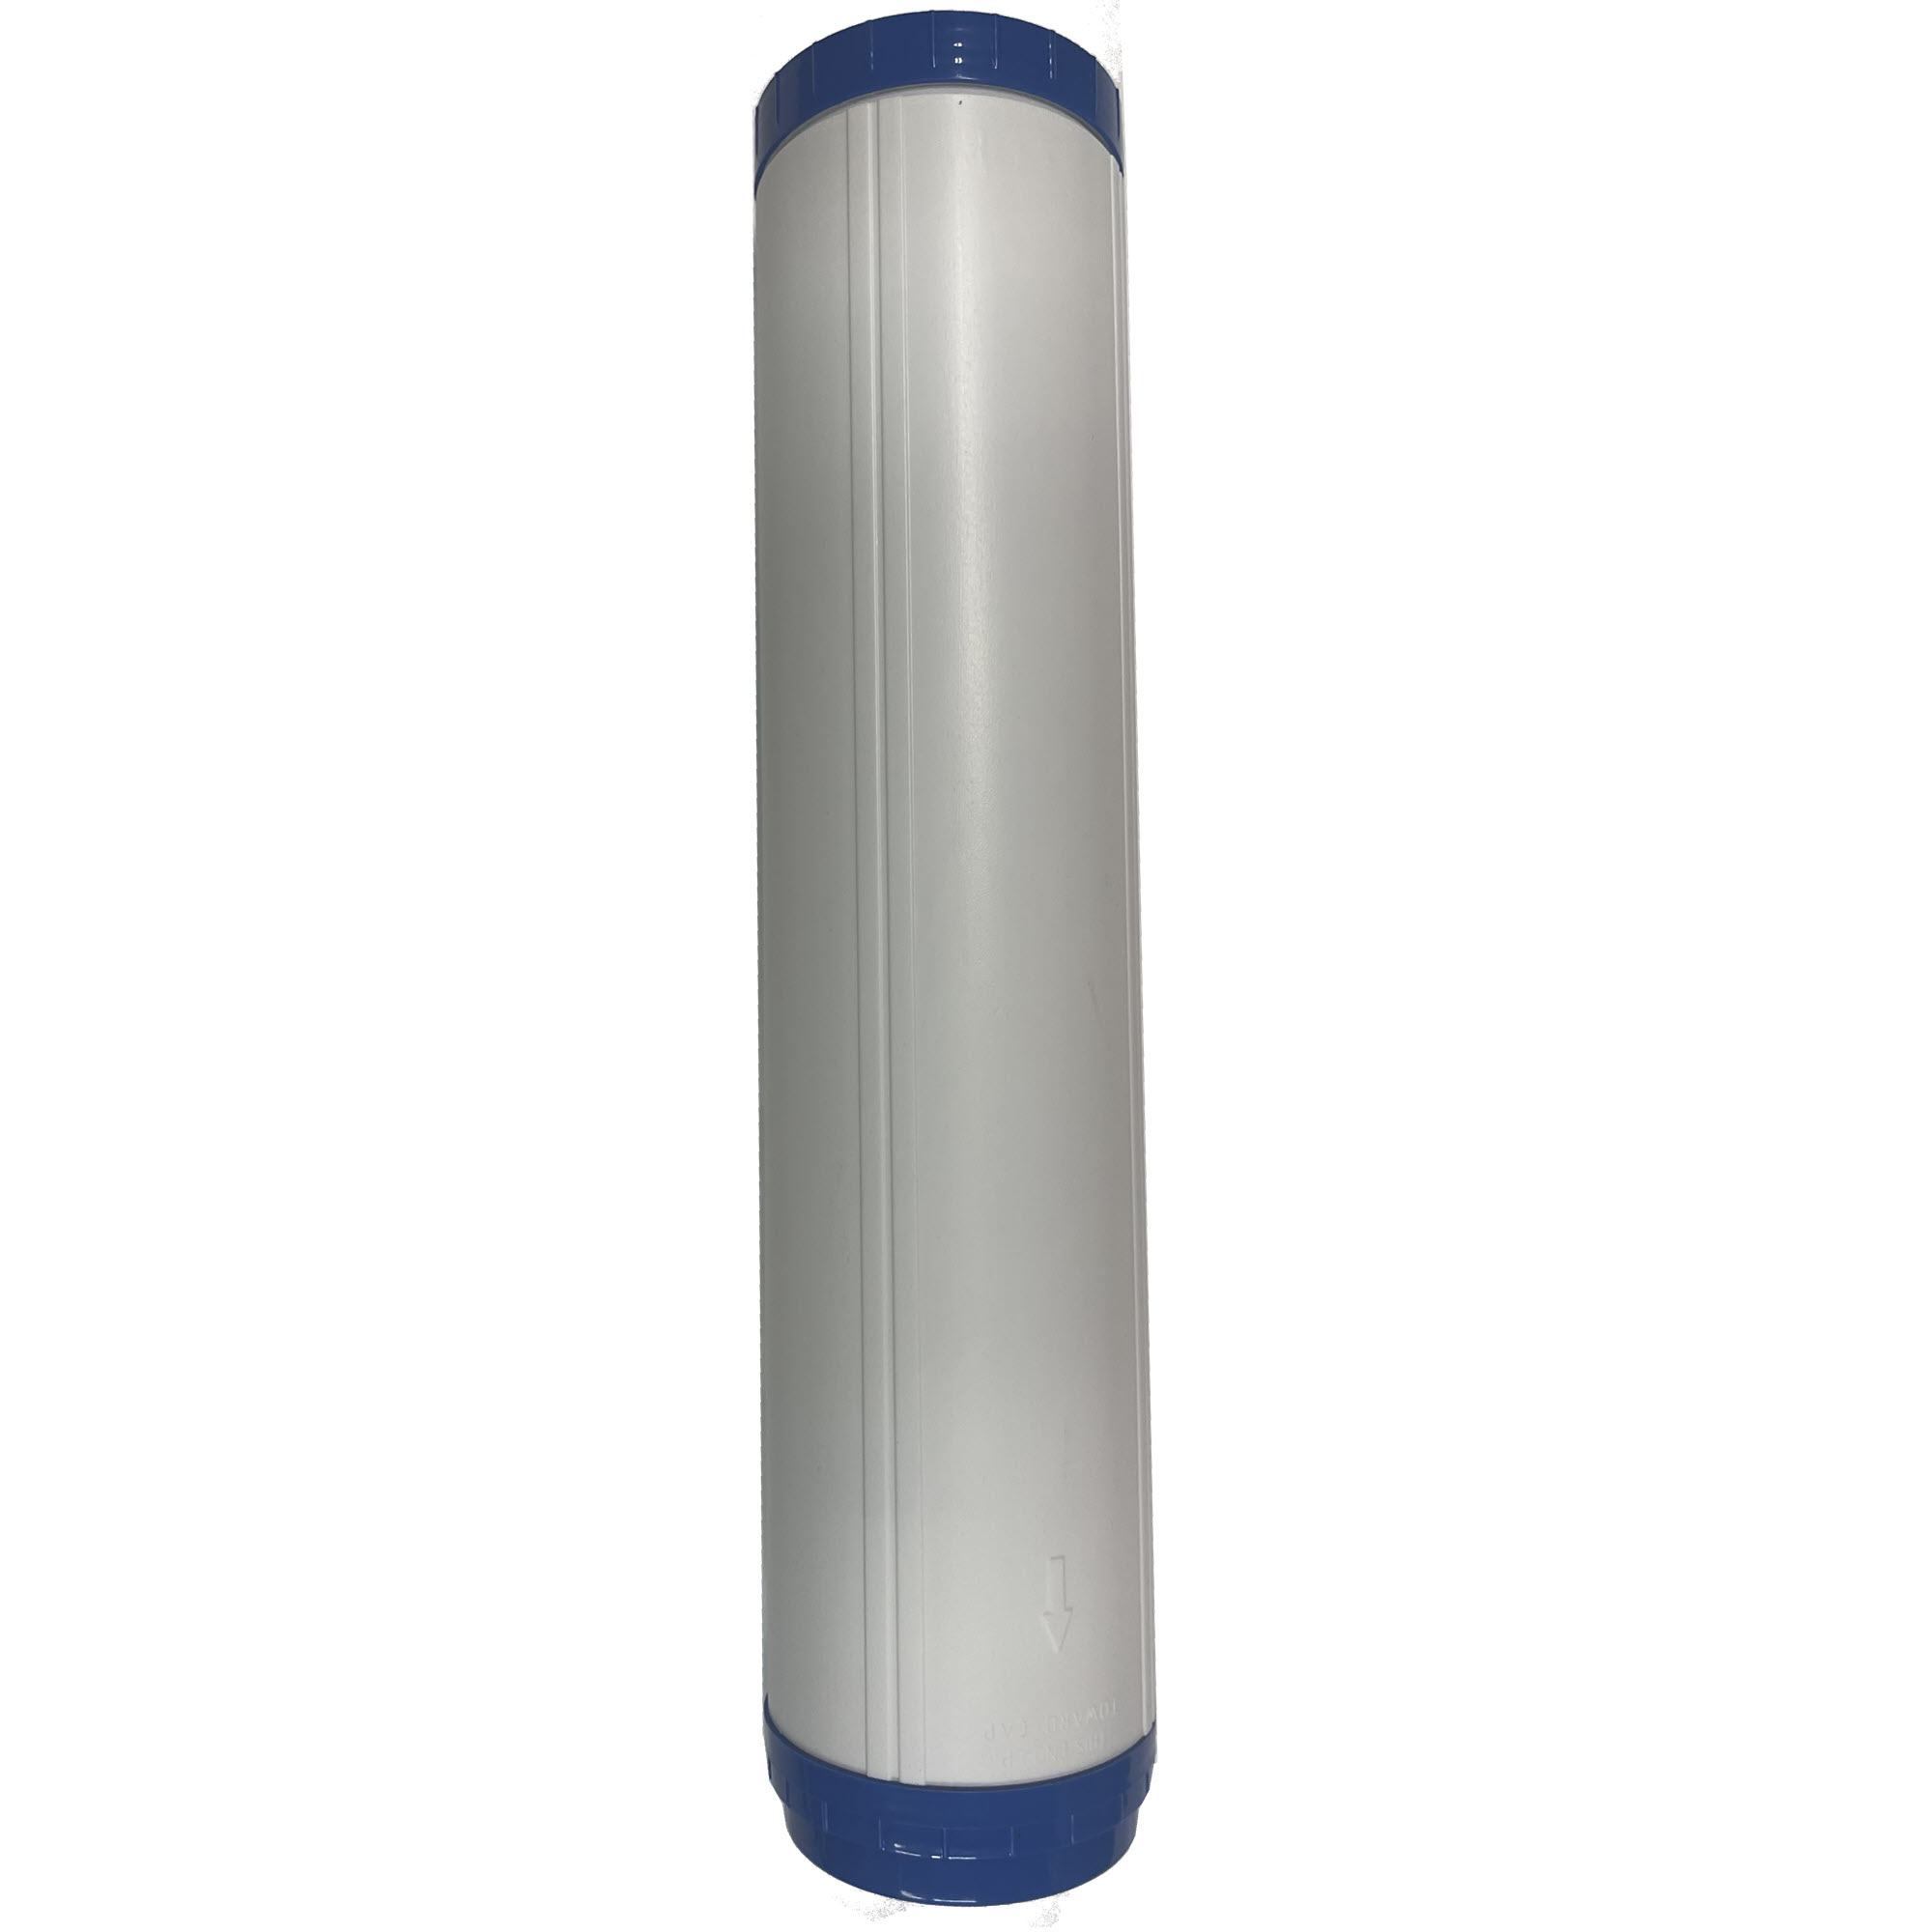 Refillable 4.5 x 20 filter cartridge for Big Blue filter housing